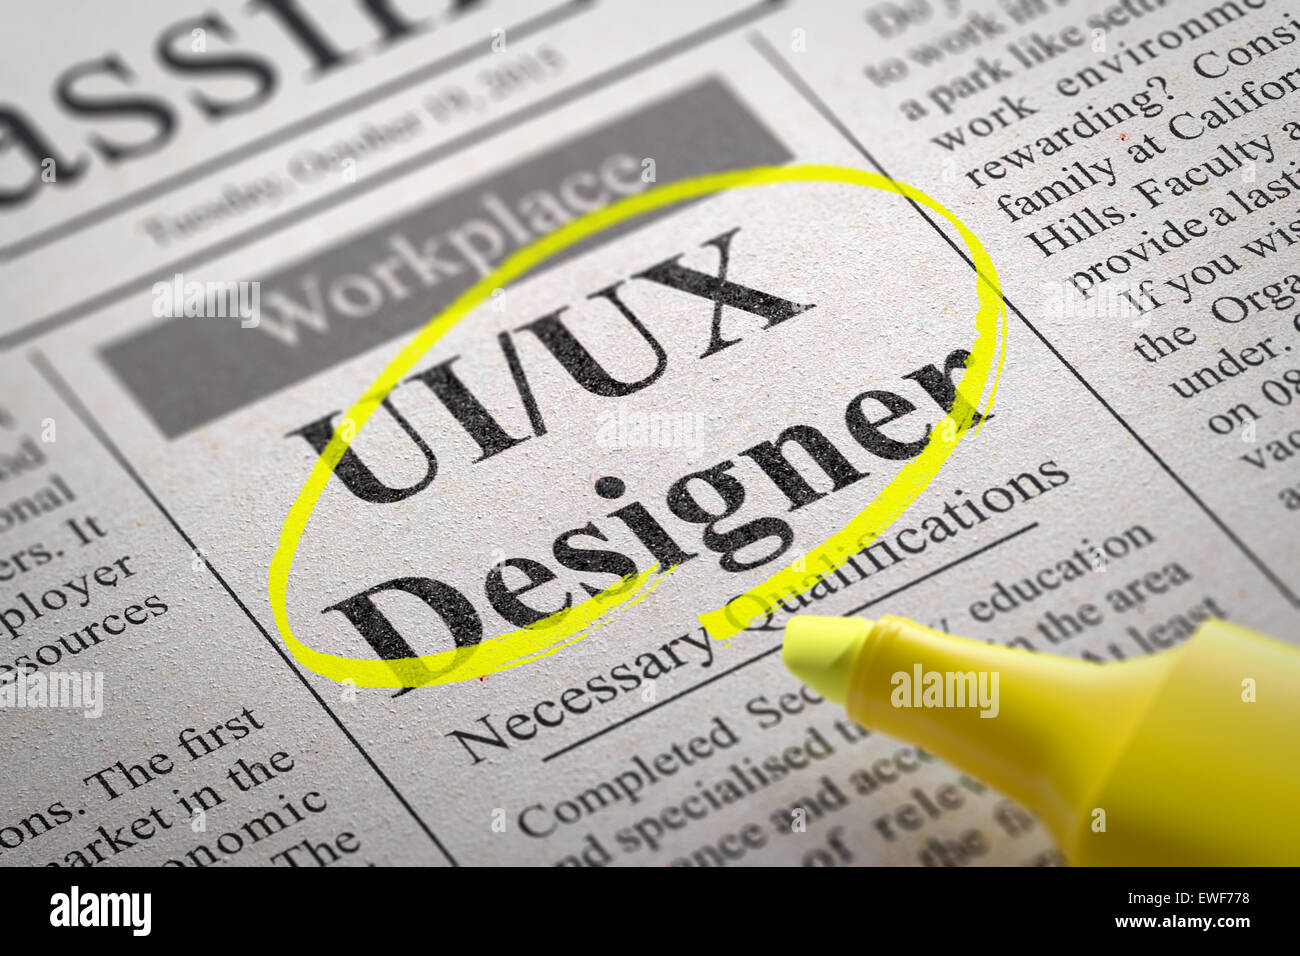 UI-UX Designer Jobs in Newspaper. Stock Photo